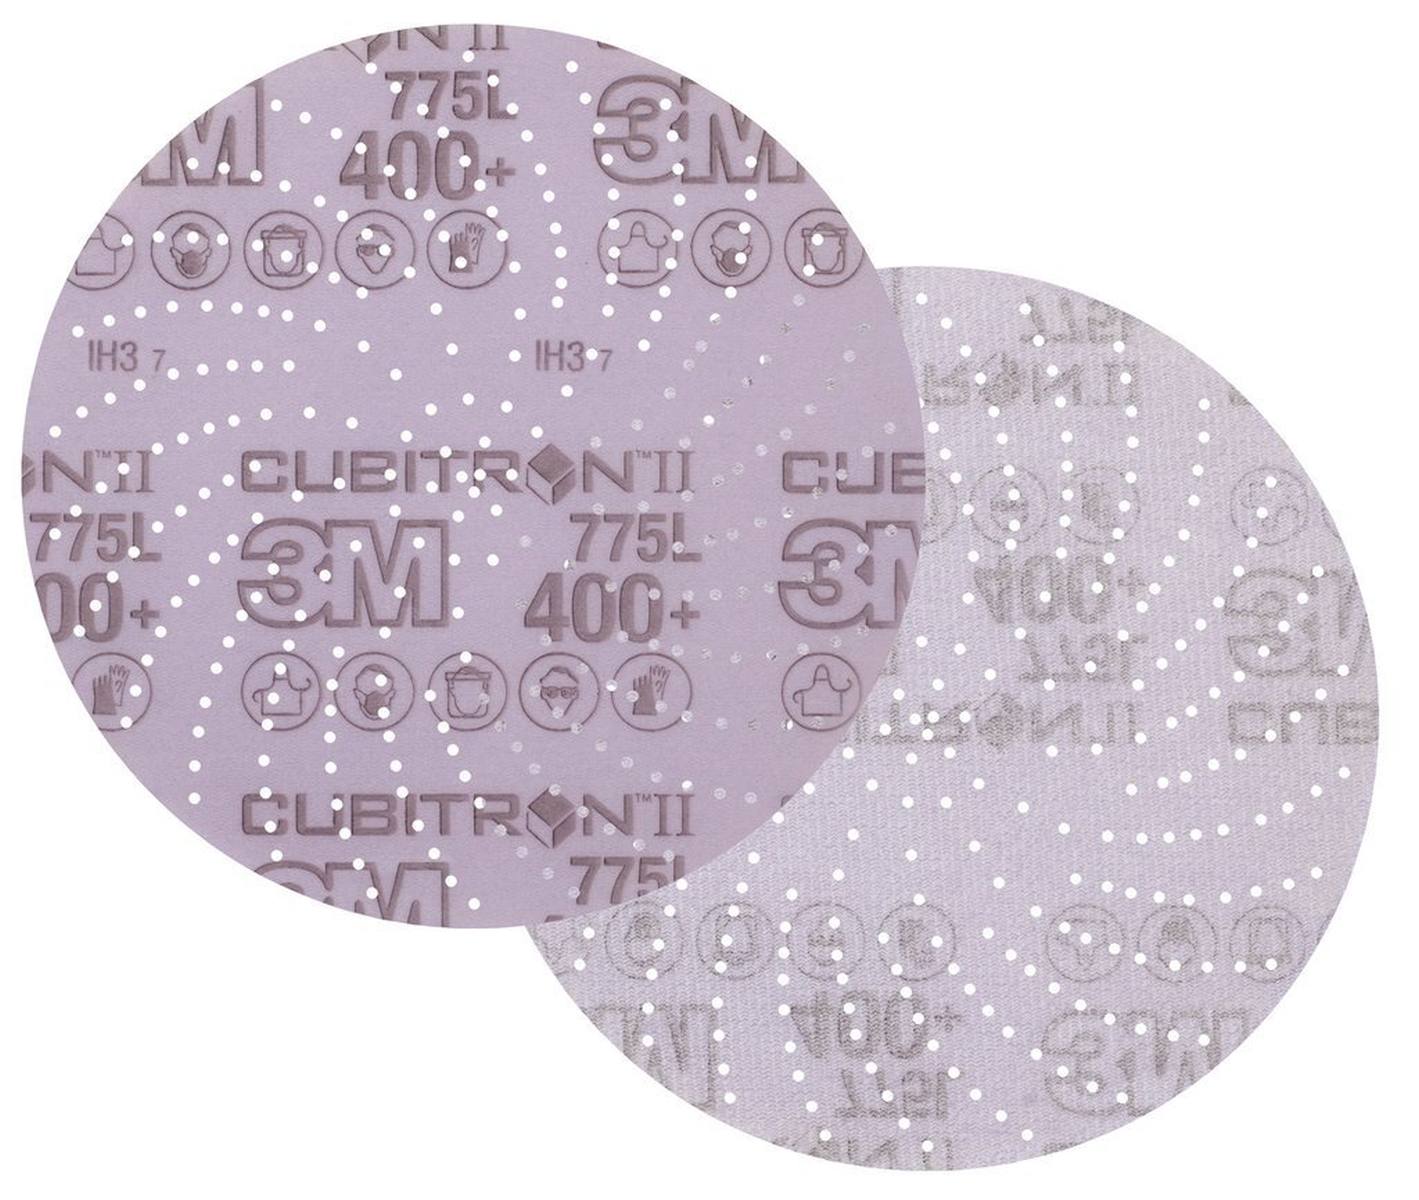 3M Cubitron II Disco per film Hookit 775L, 150 mm, 400+, multiforo #05059